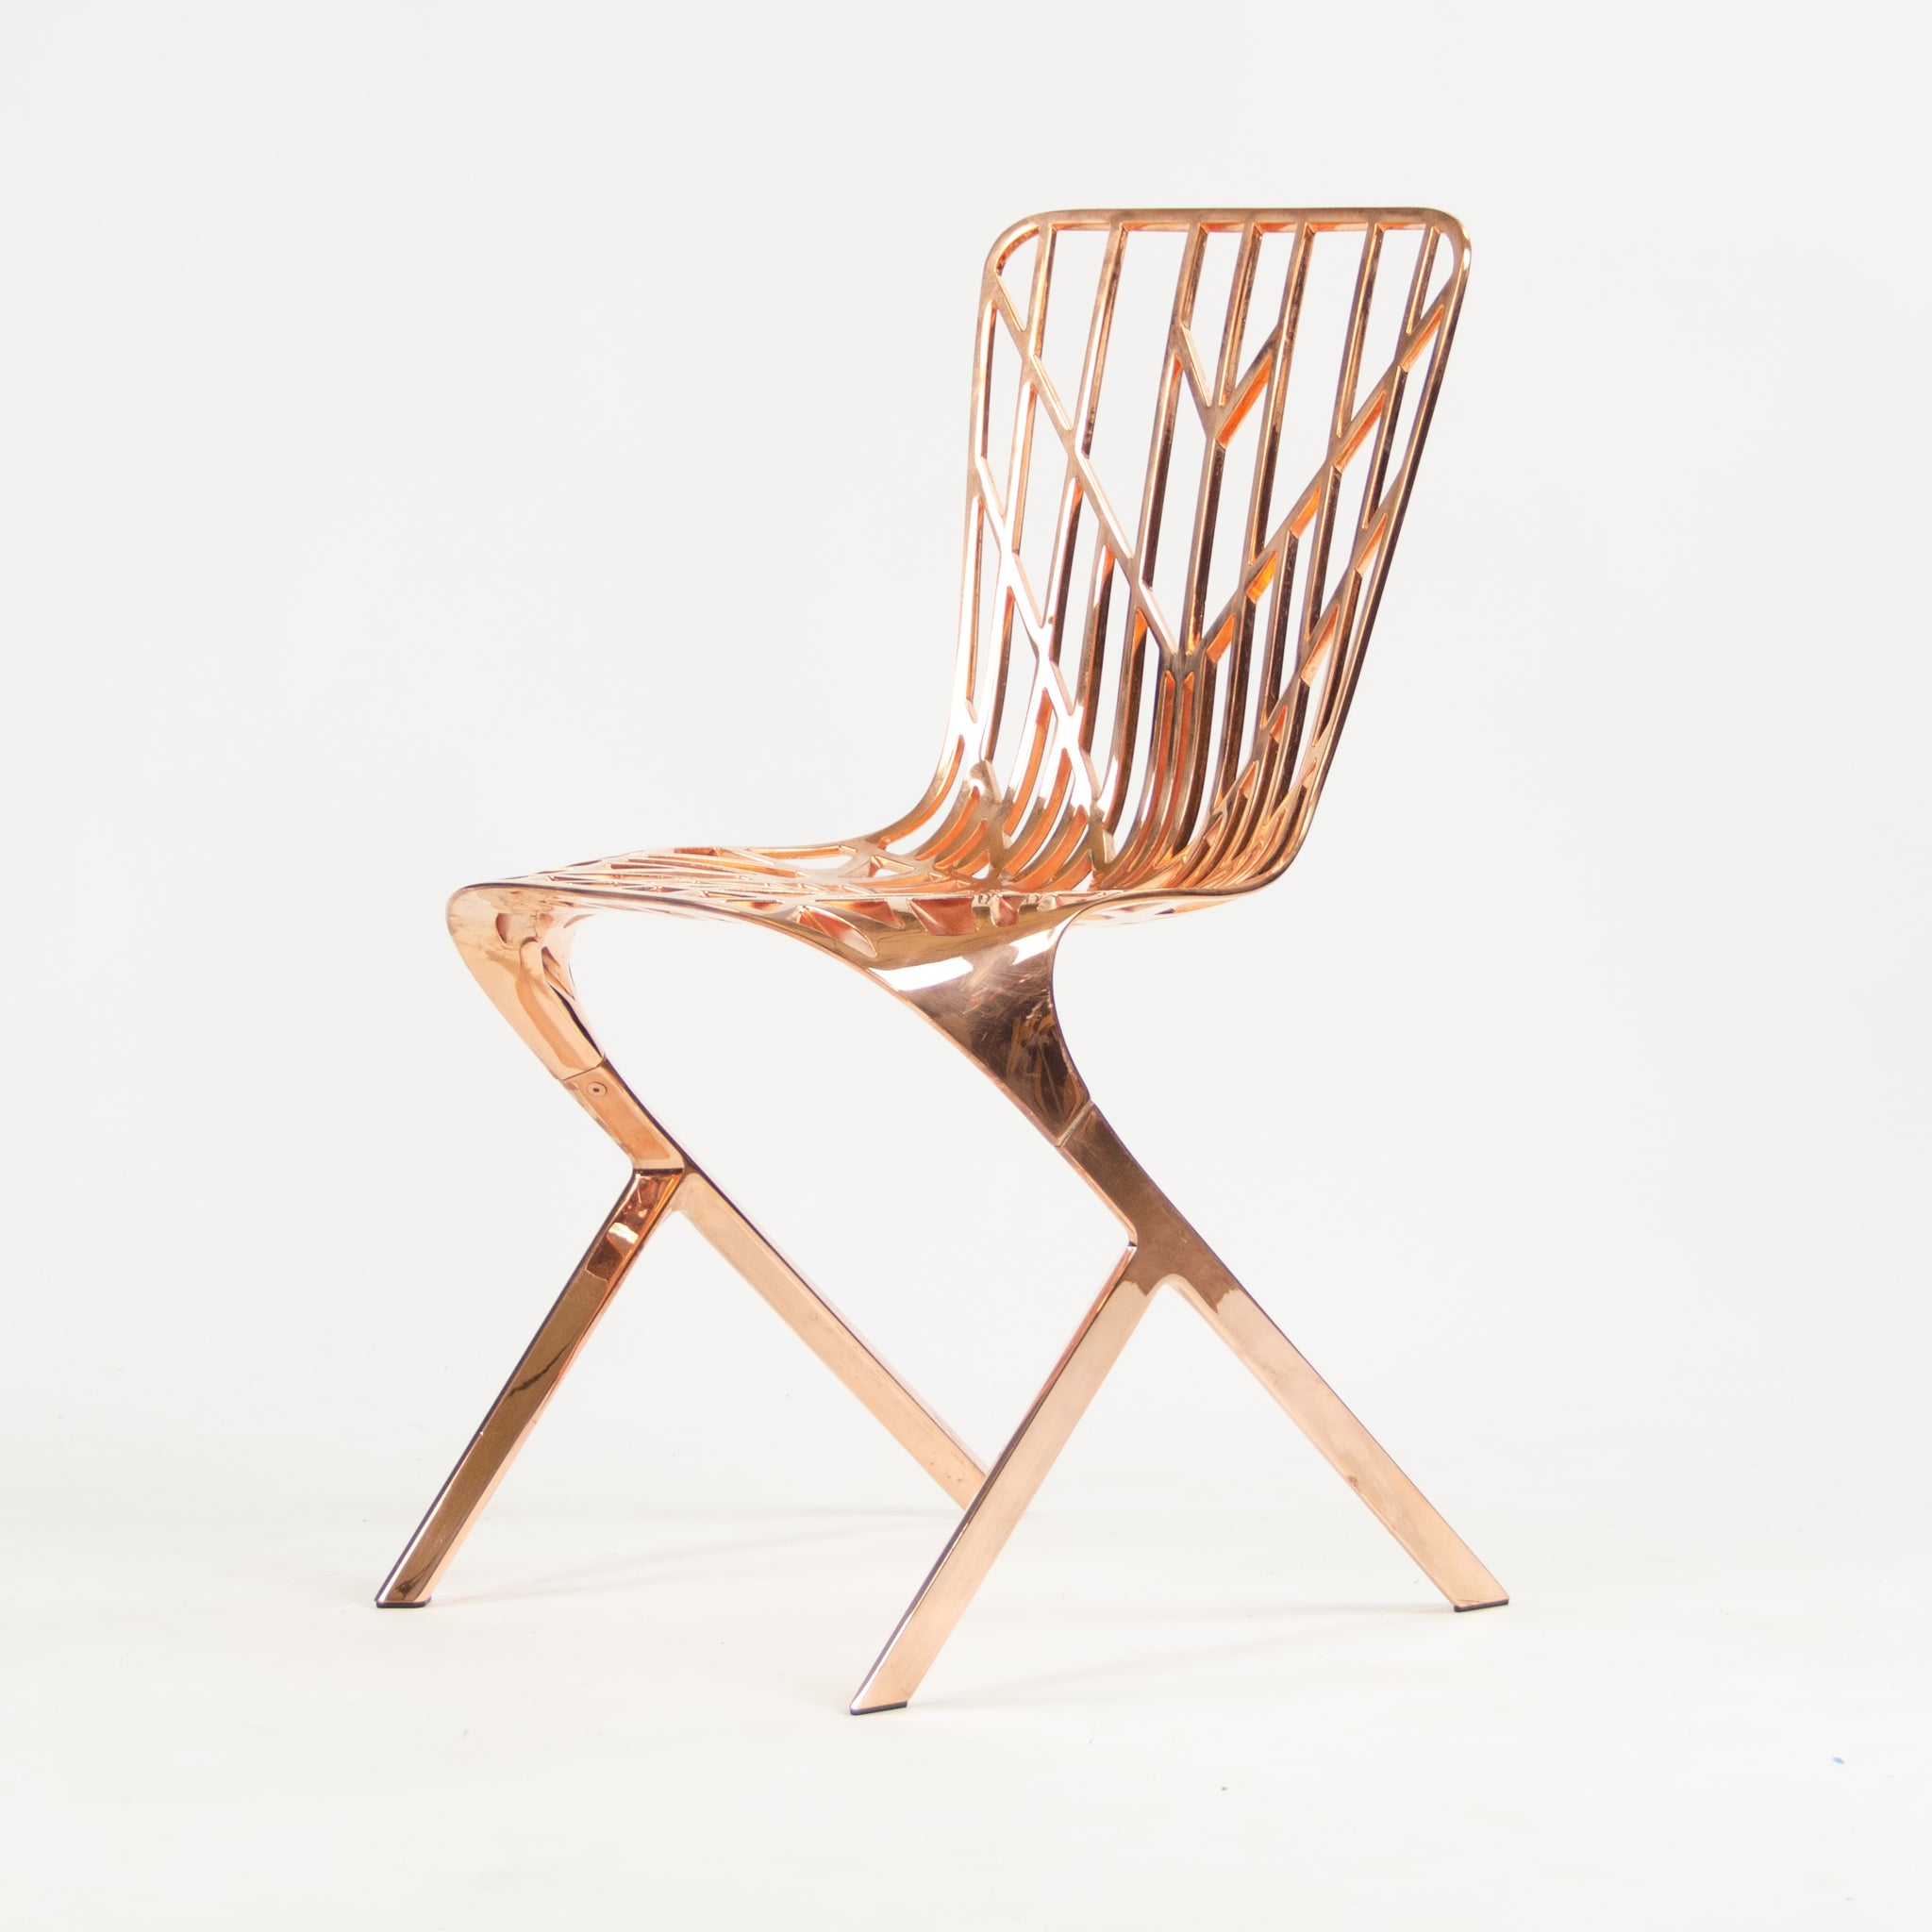 SOLD 2013 Knoll Studio David Adjaye Washington Skeleton Dining Chair Copper